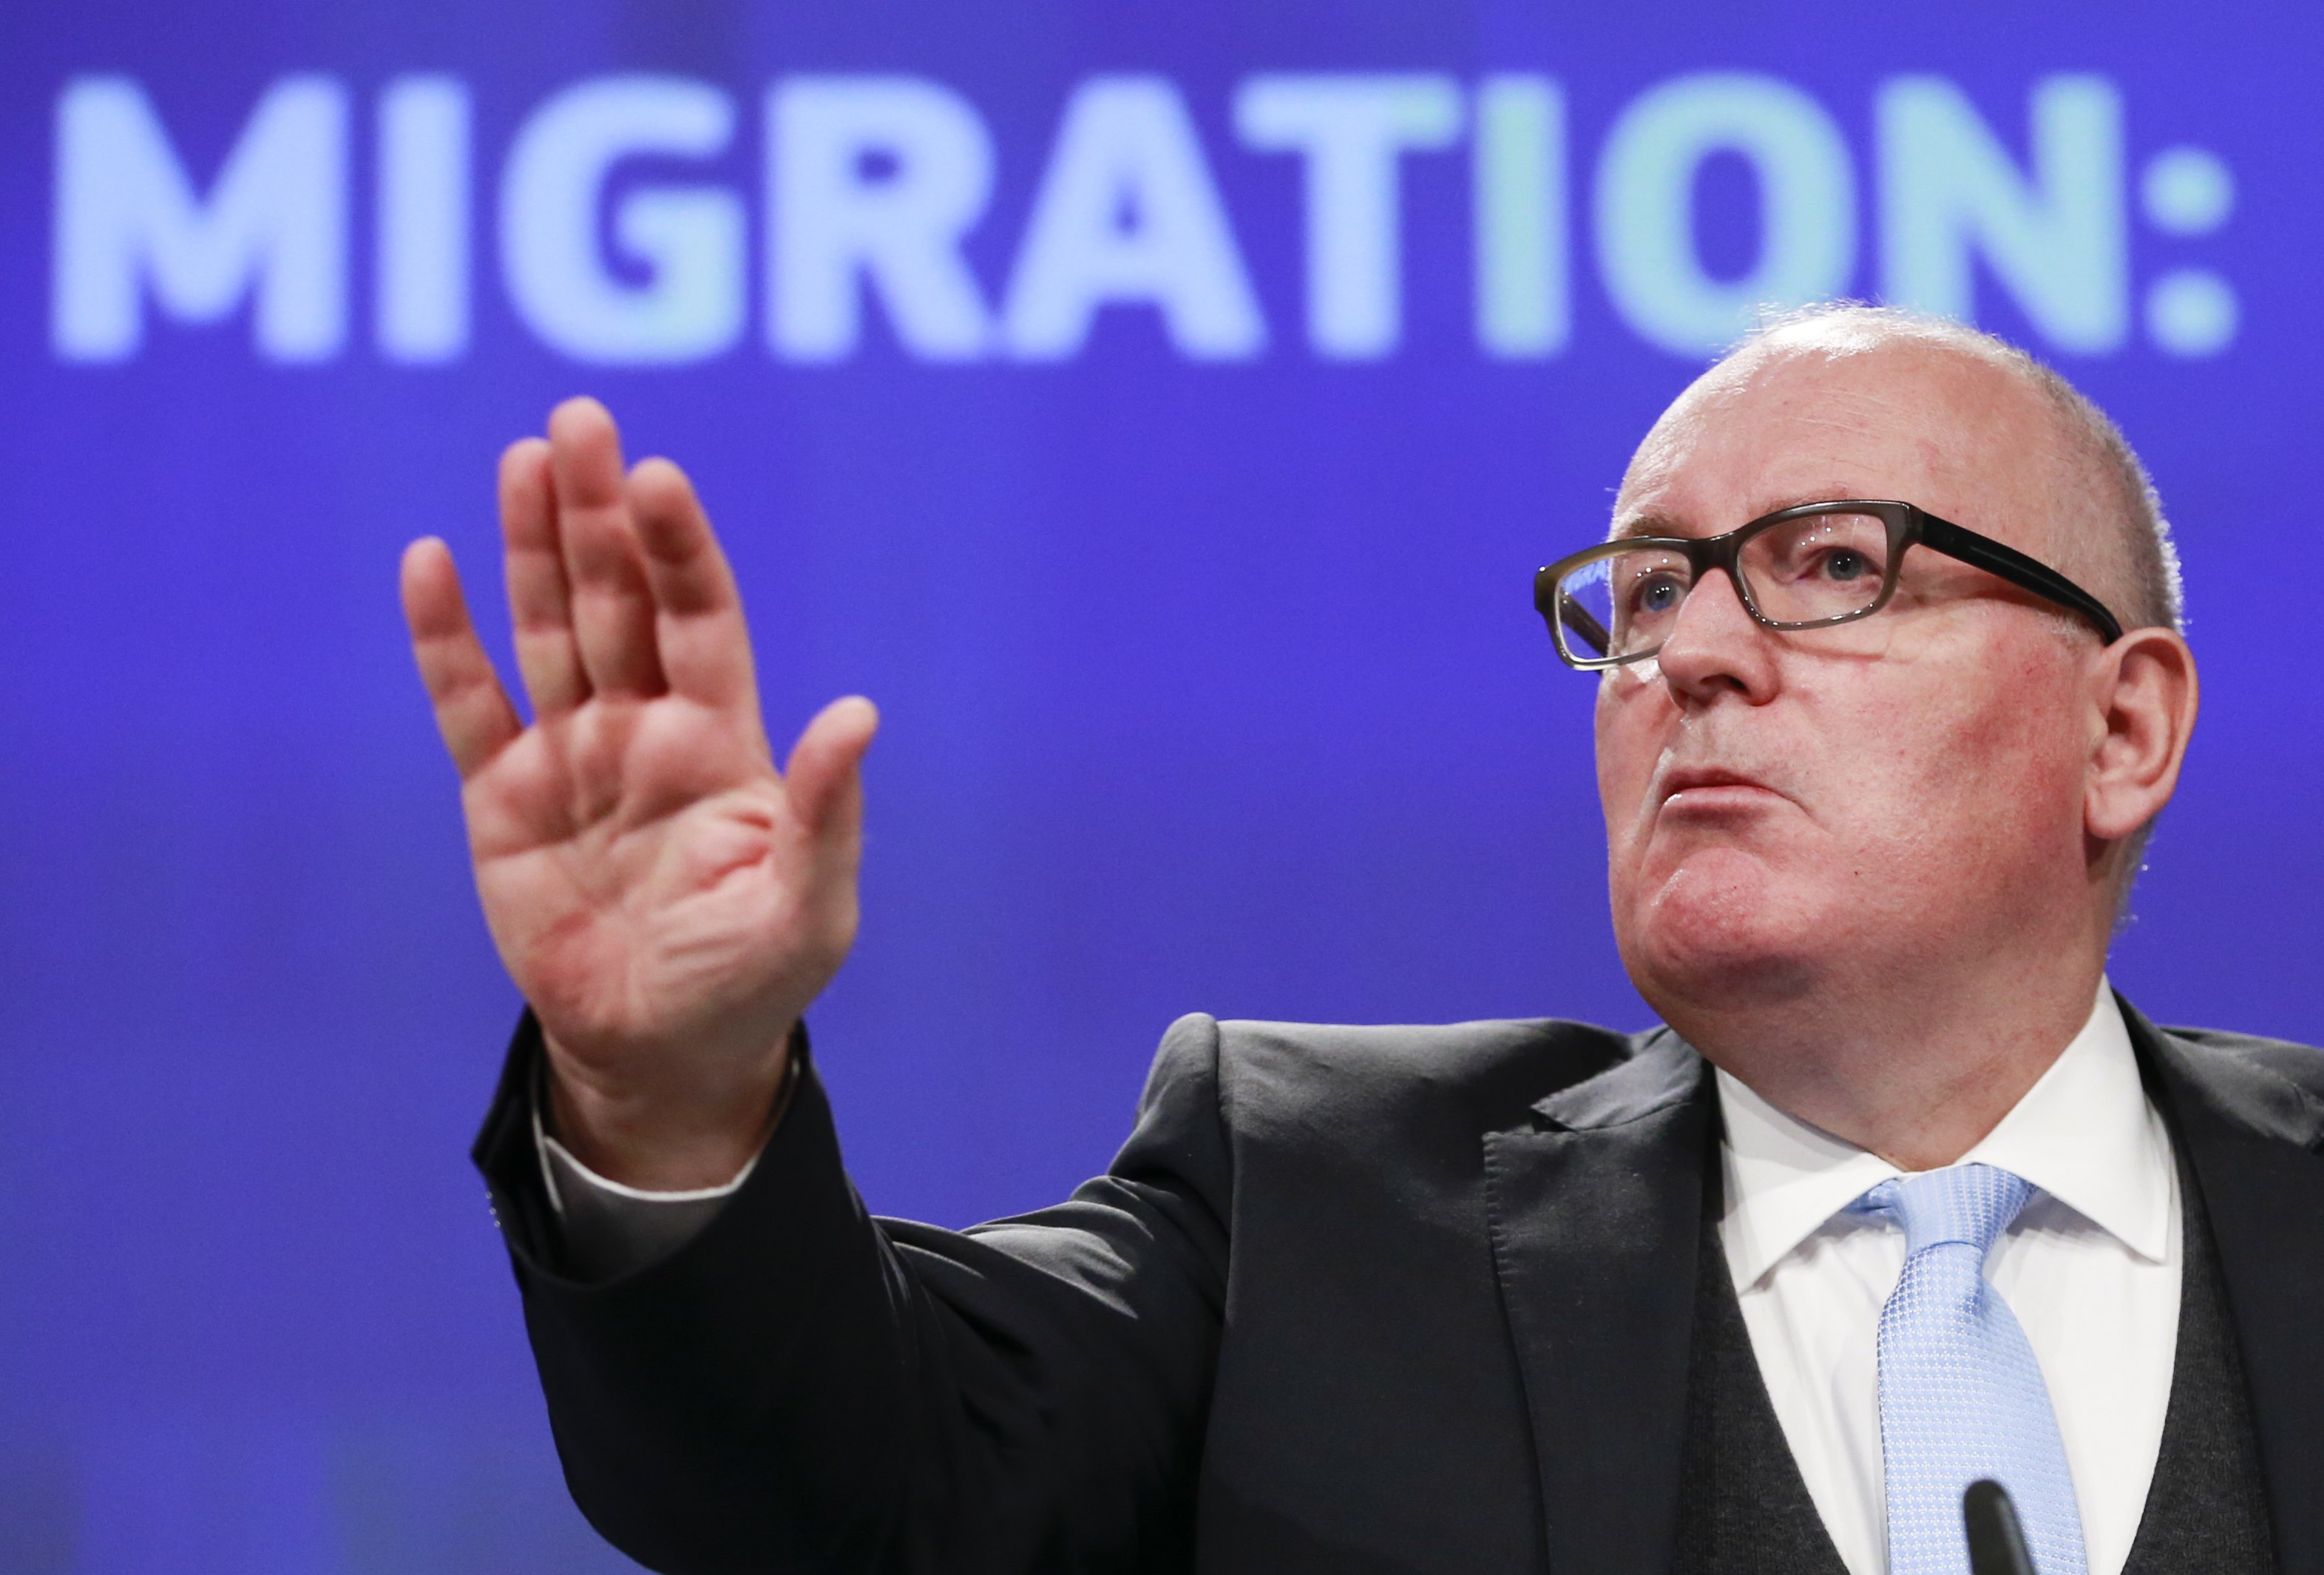 Commission seeks ‘European solution’ for migration